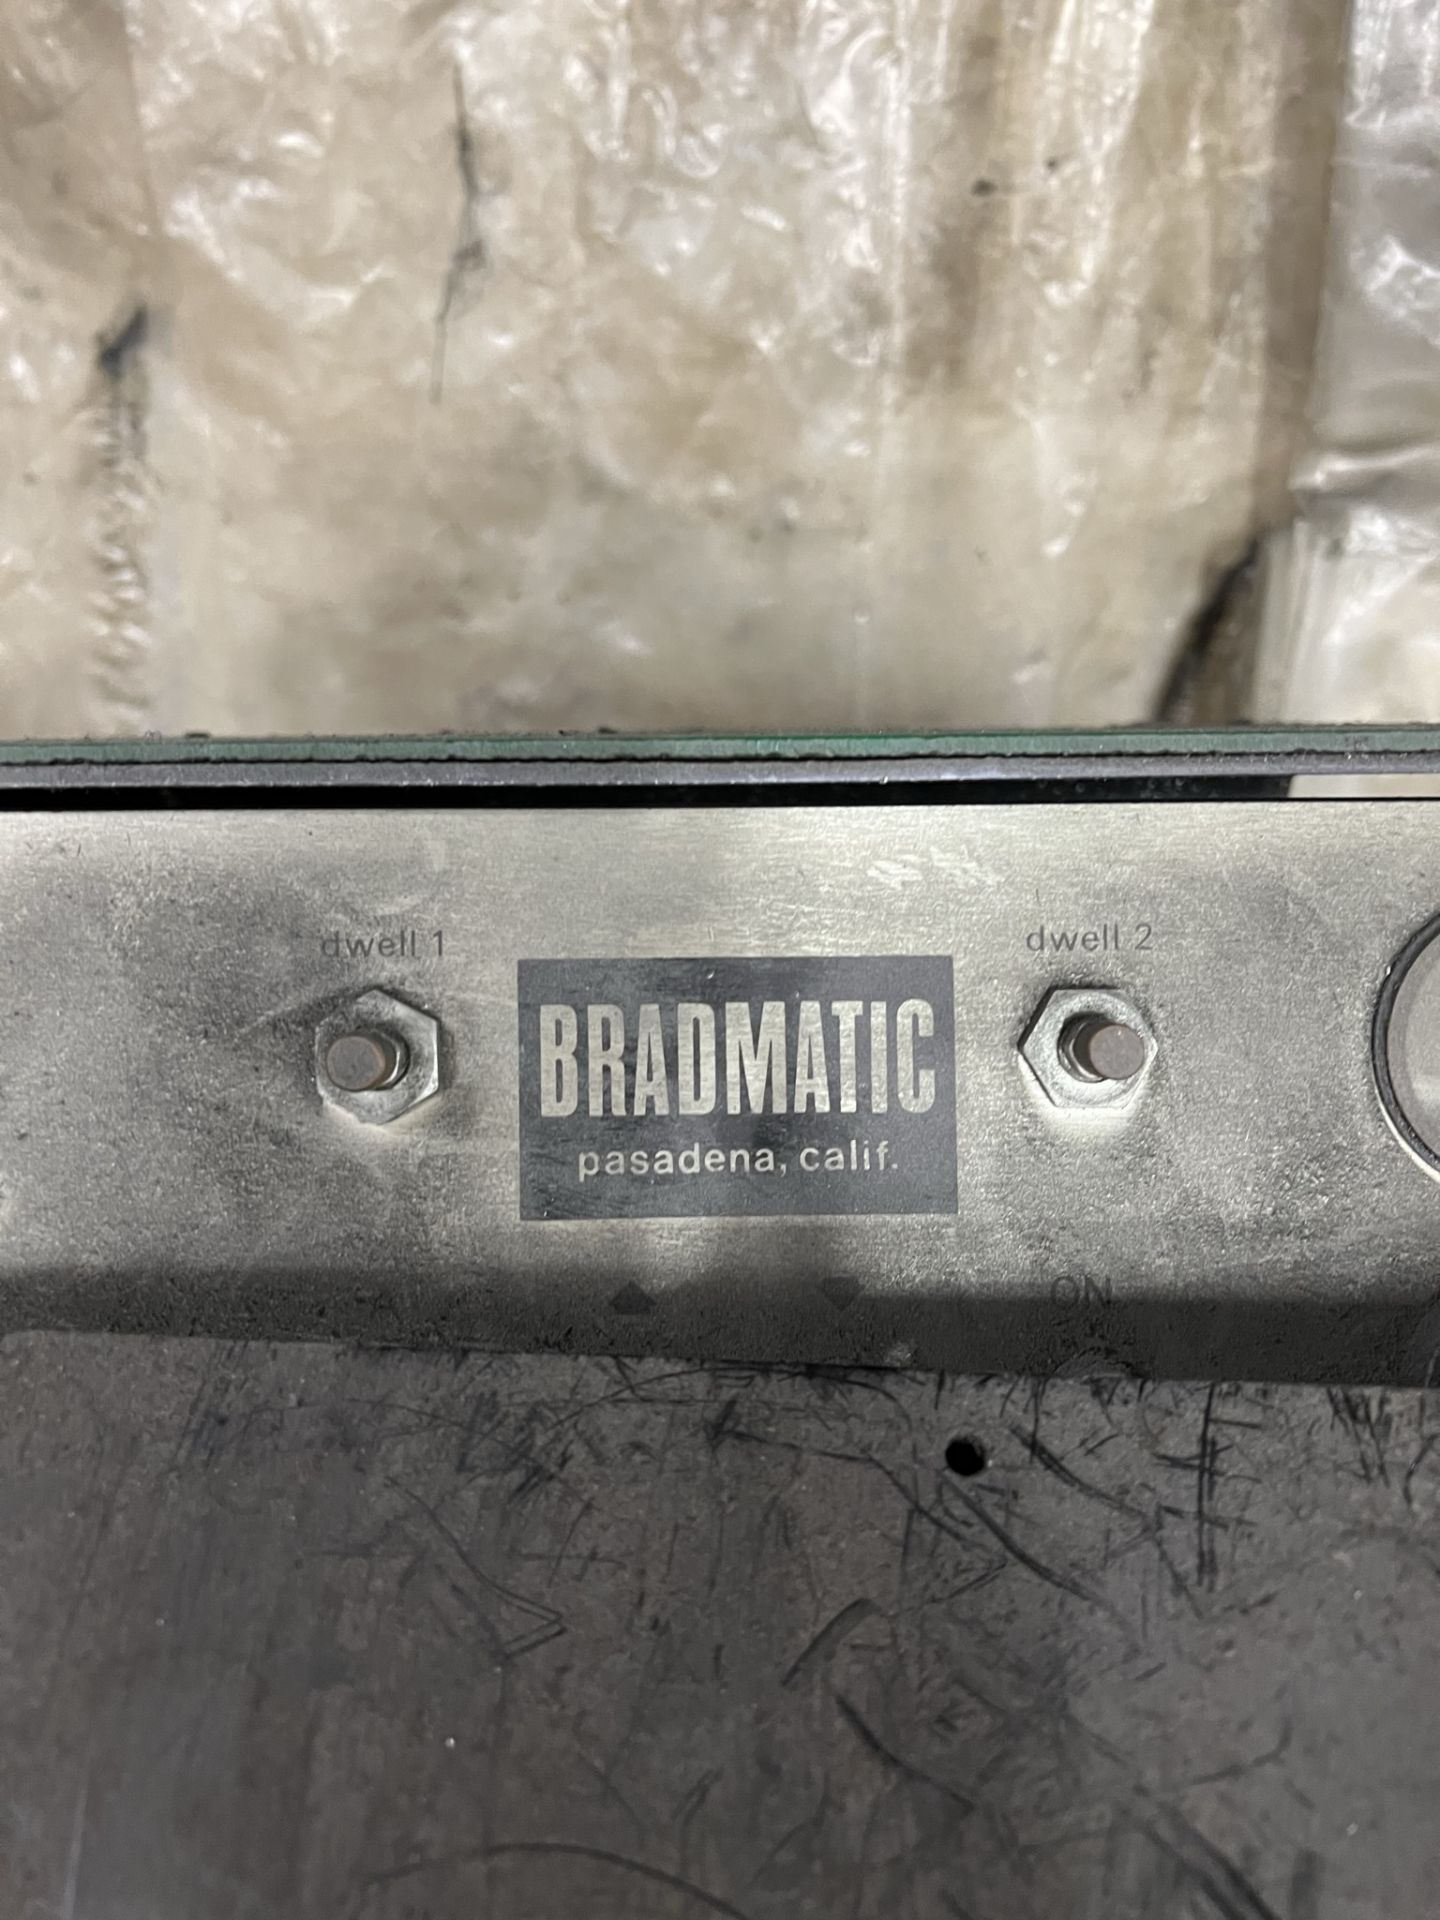 BRADMATIC FIXTURE - Image 2 of 2